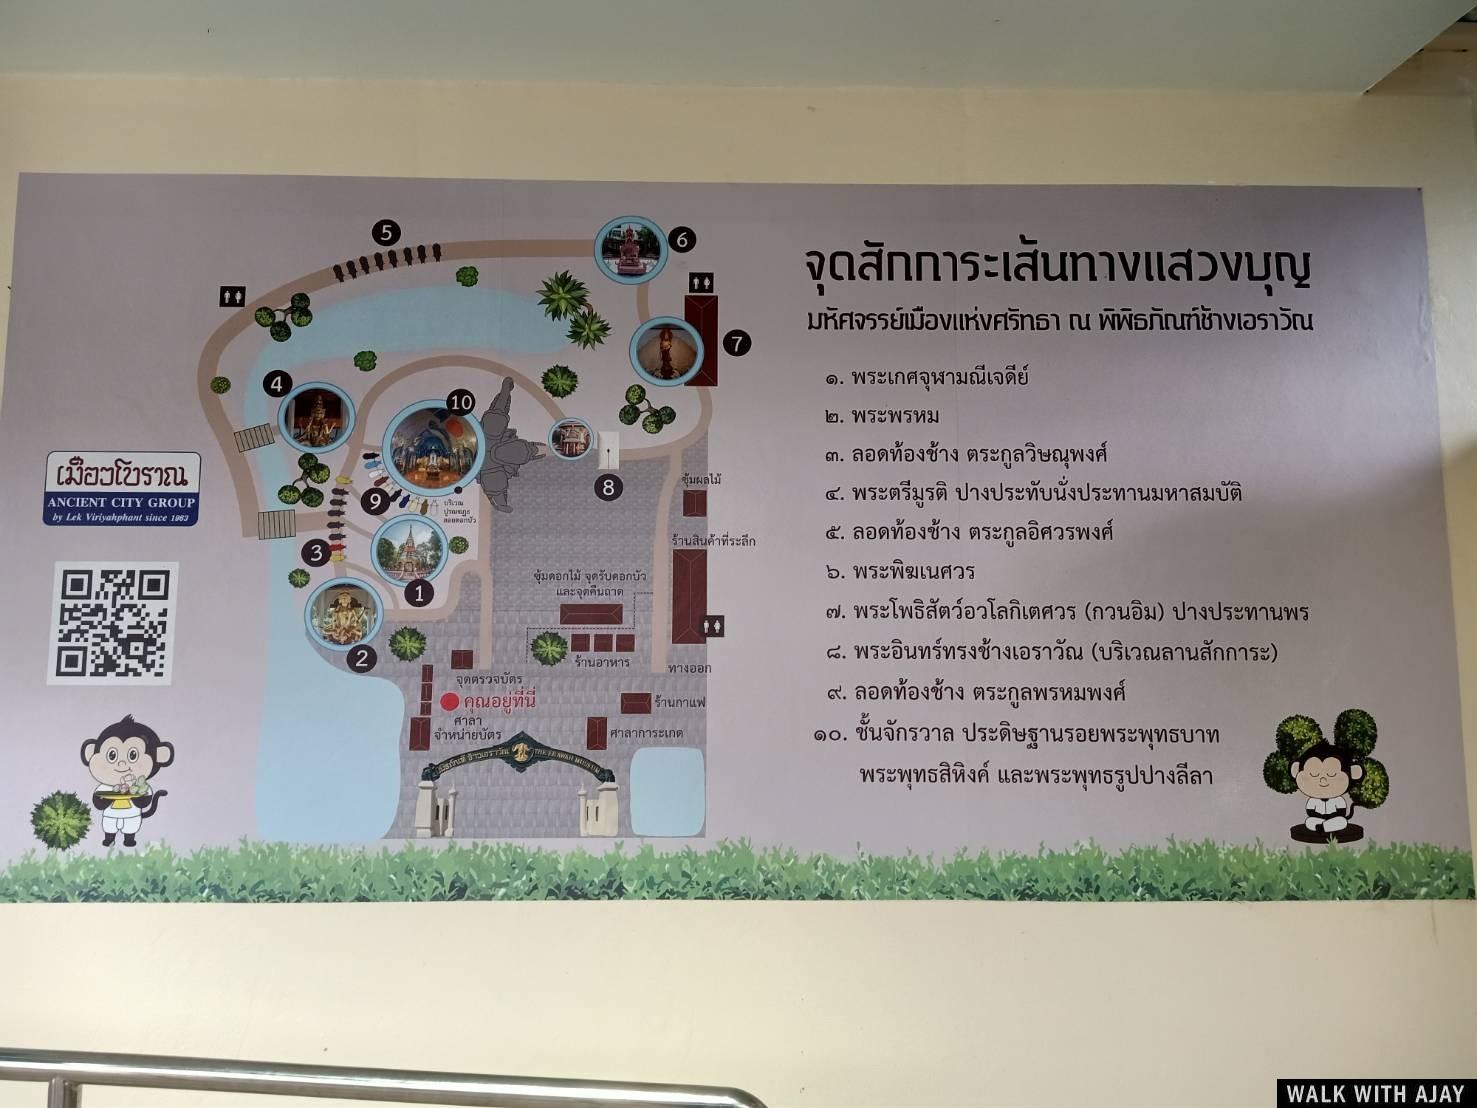 Our Half Day Trip To Erawan Museum (Giant Three-Headed Elephant) : Bangkok, Thailand (Jun’21) 2